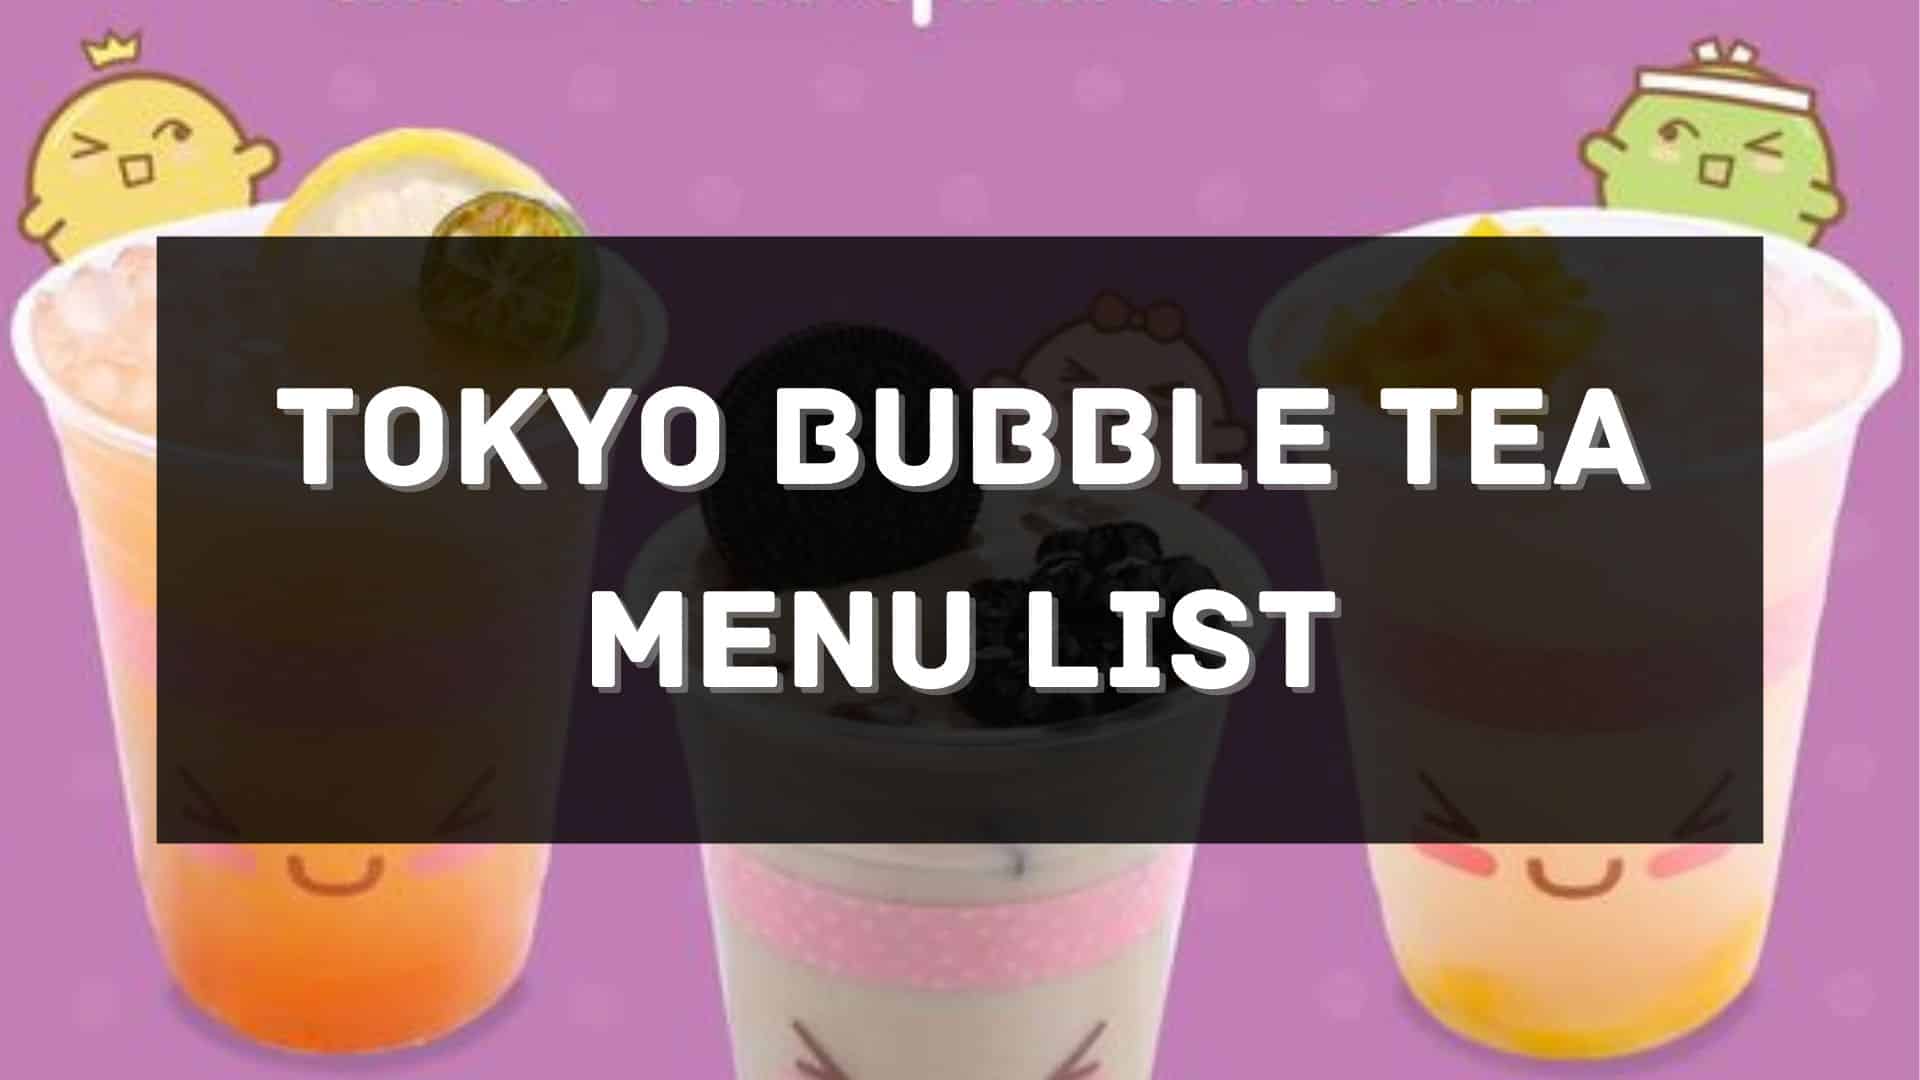 tokyo bubble tea menu price philippines